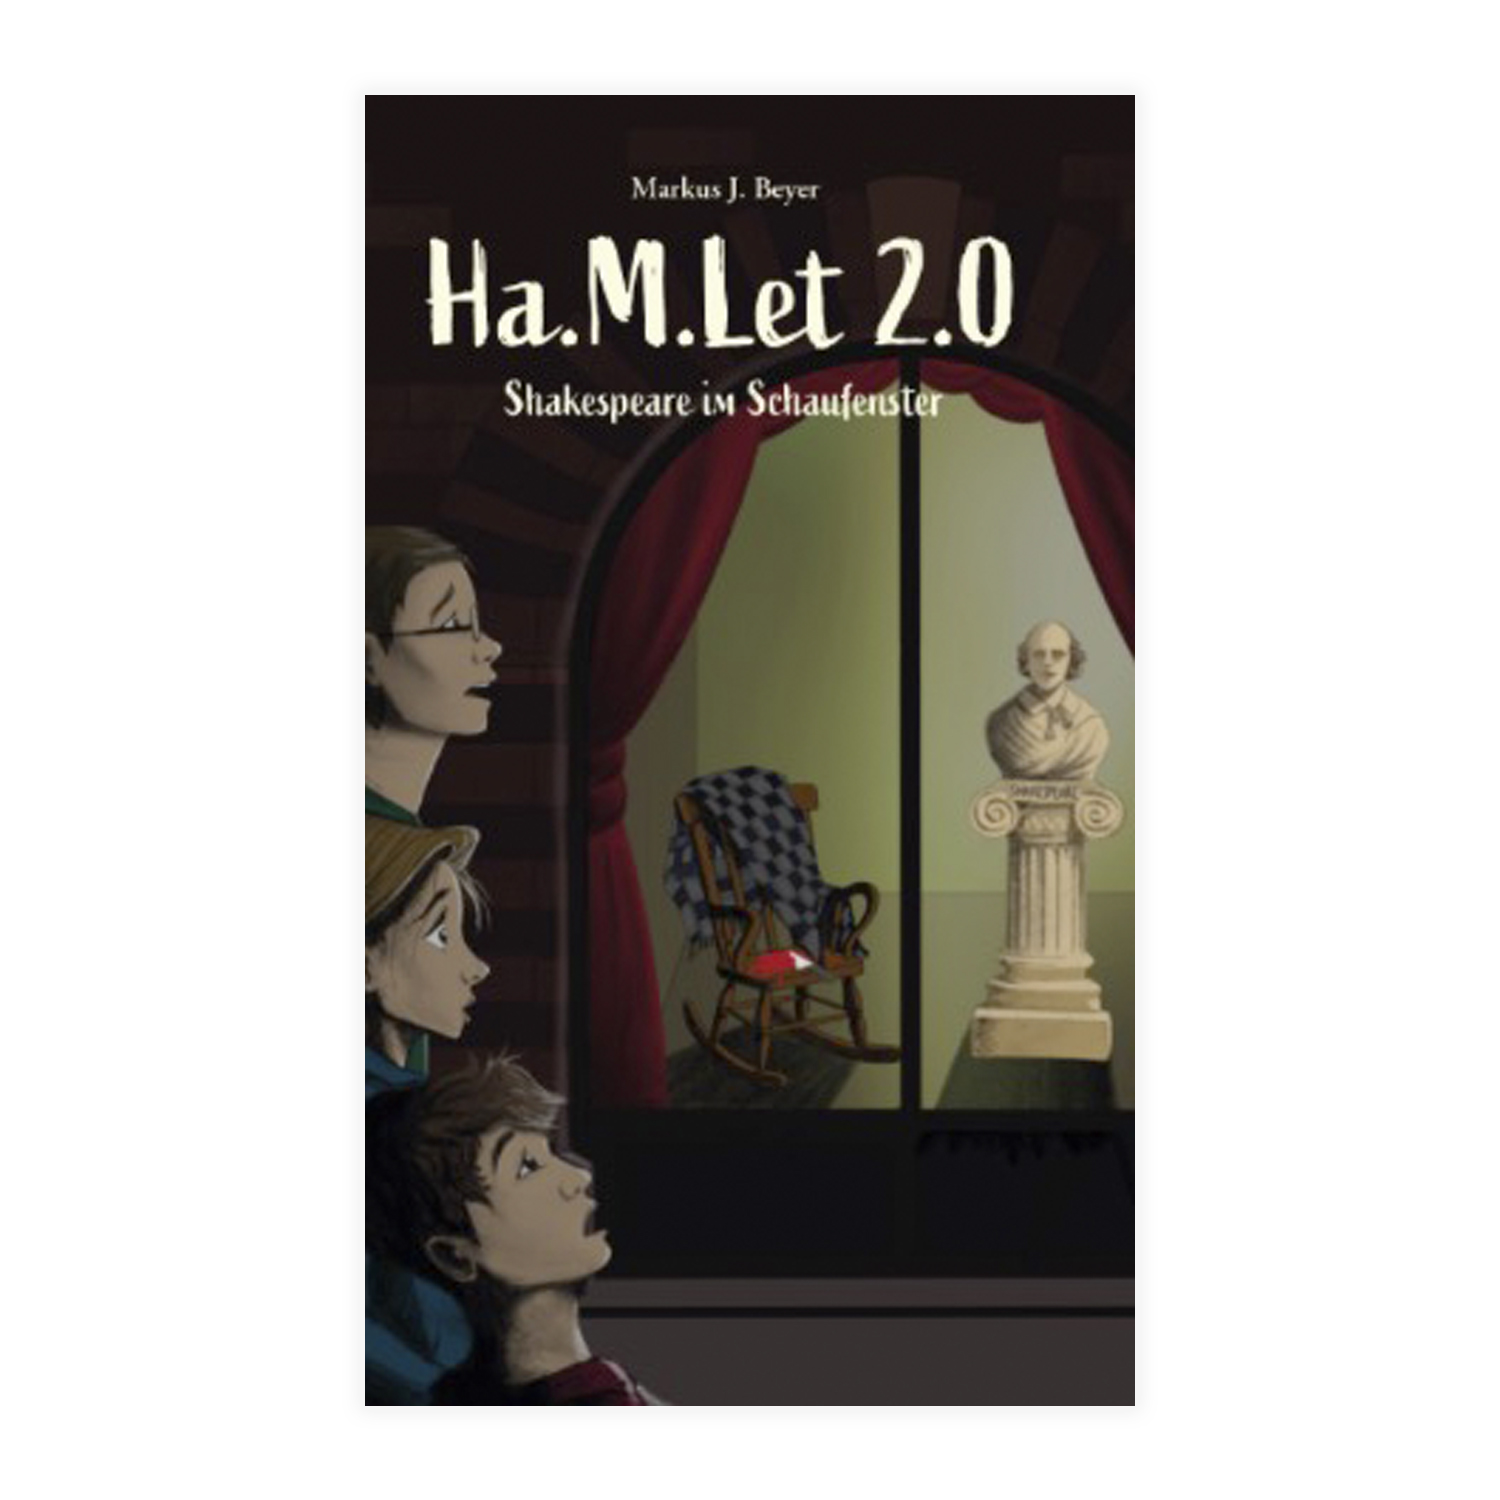 Ha.M.Let 2.0 – Shakespeare im Schaufenster (Markus J. Beyer)